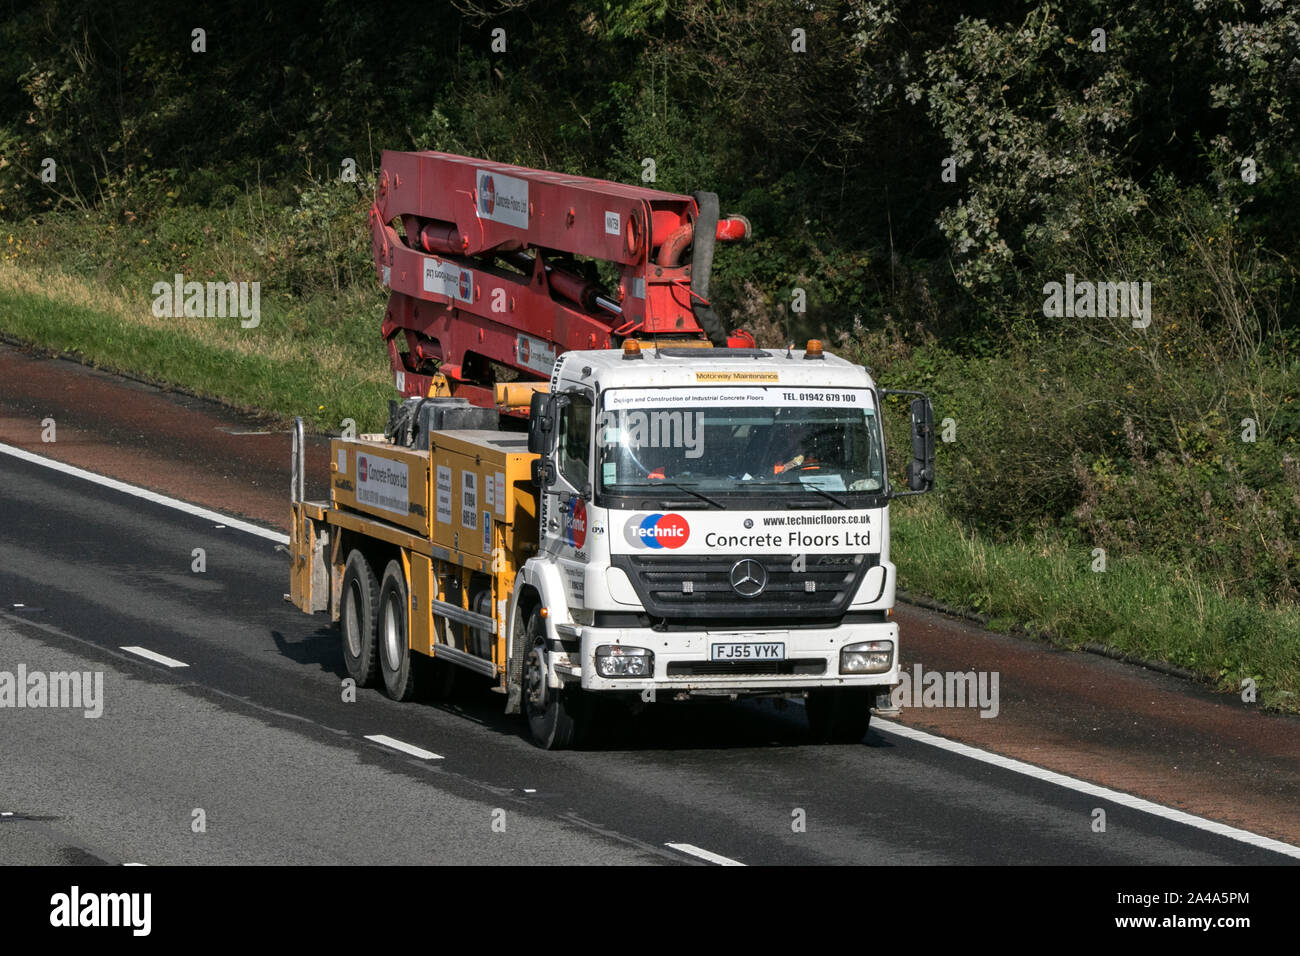 A Technic concrete floors Mercedes truck heading southbound on the M6 motorway near Preston in Lancashire, UK Stock Photo